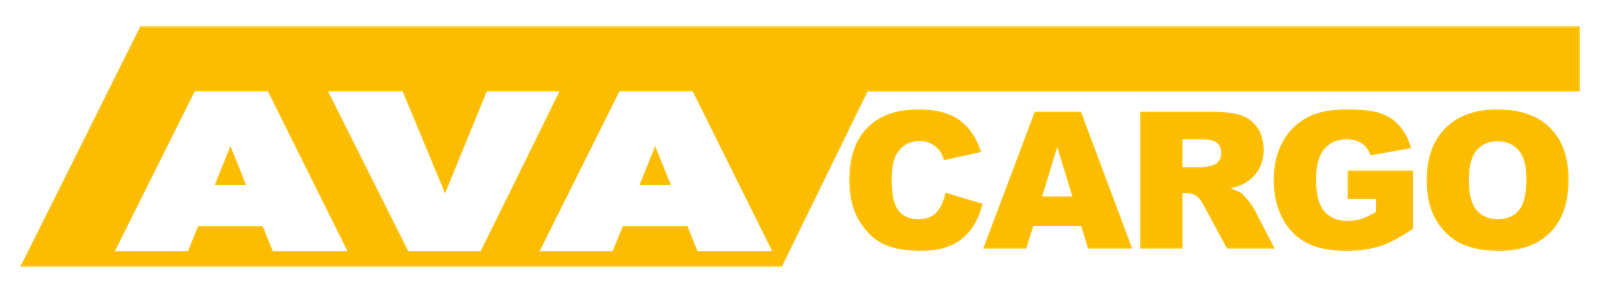 avacargo logo